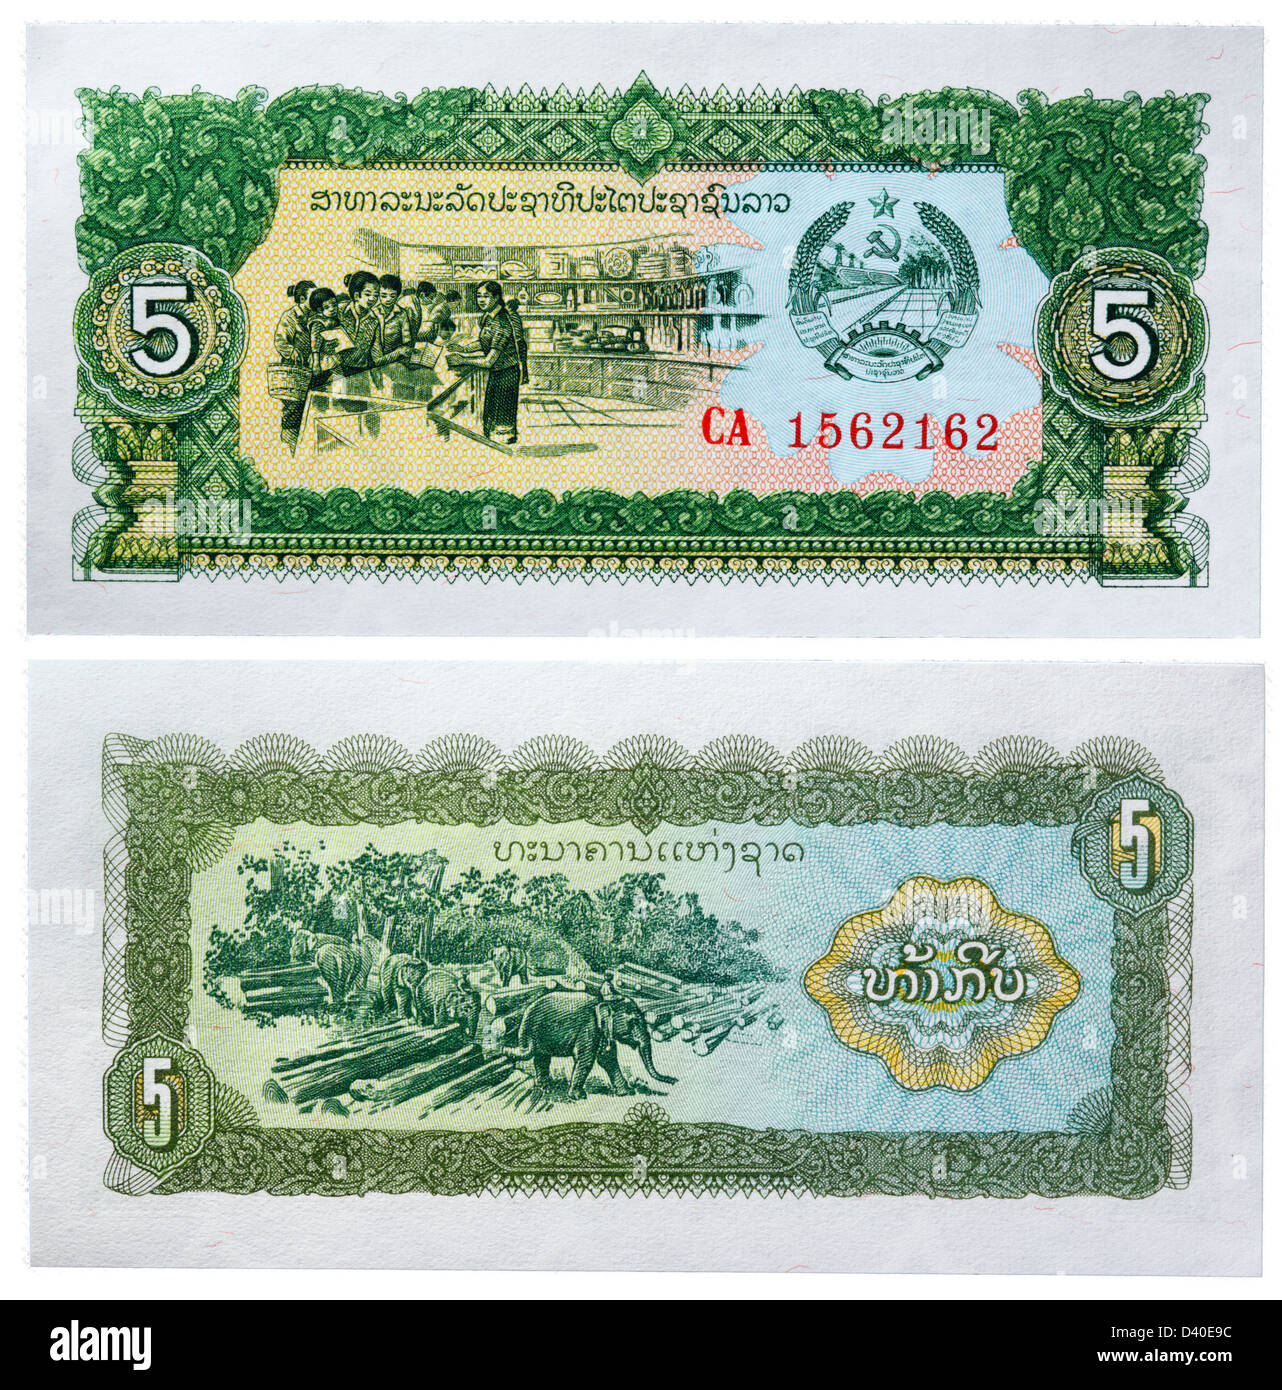 5 billetes de Kip, almacenar y registrar los elefantes, Laos, 1979 Foto de stock